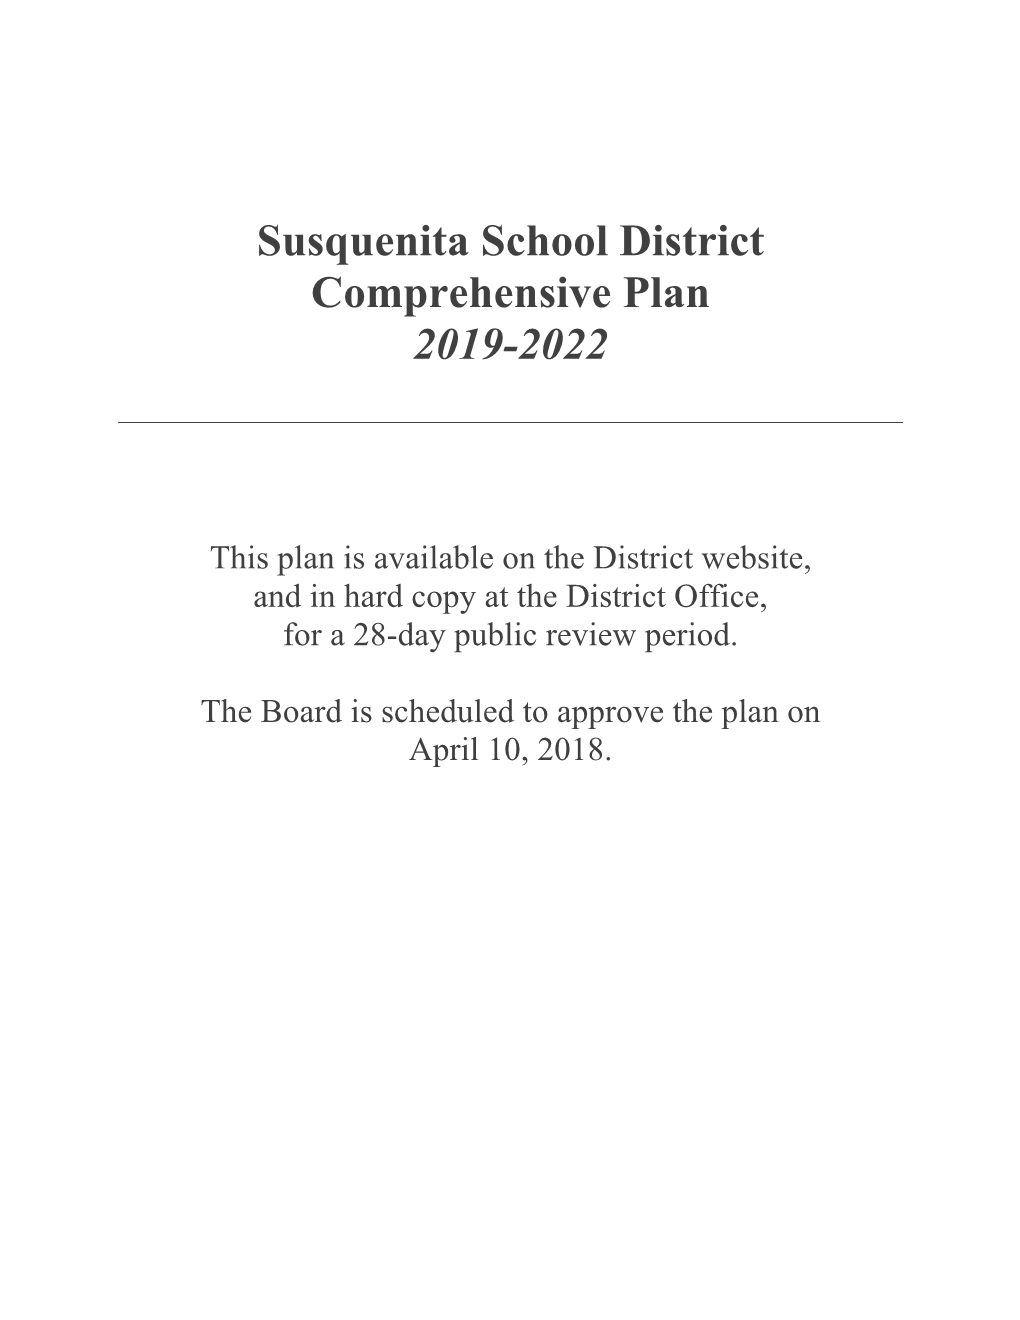 Susquenita School District Comprehensive Plan 2019-2022